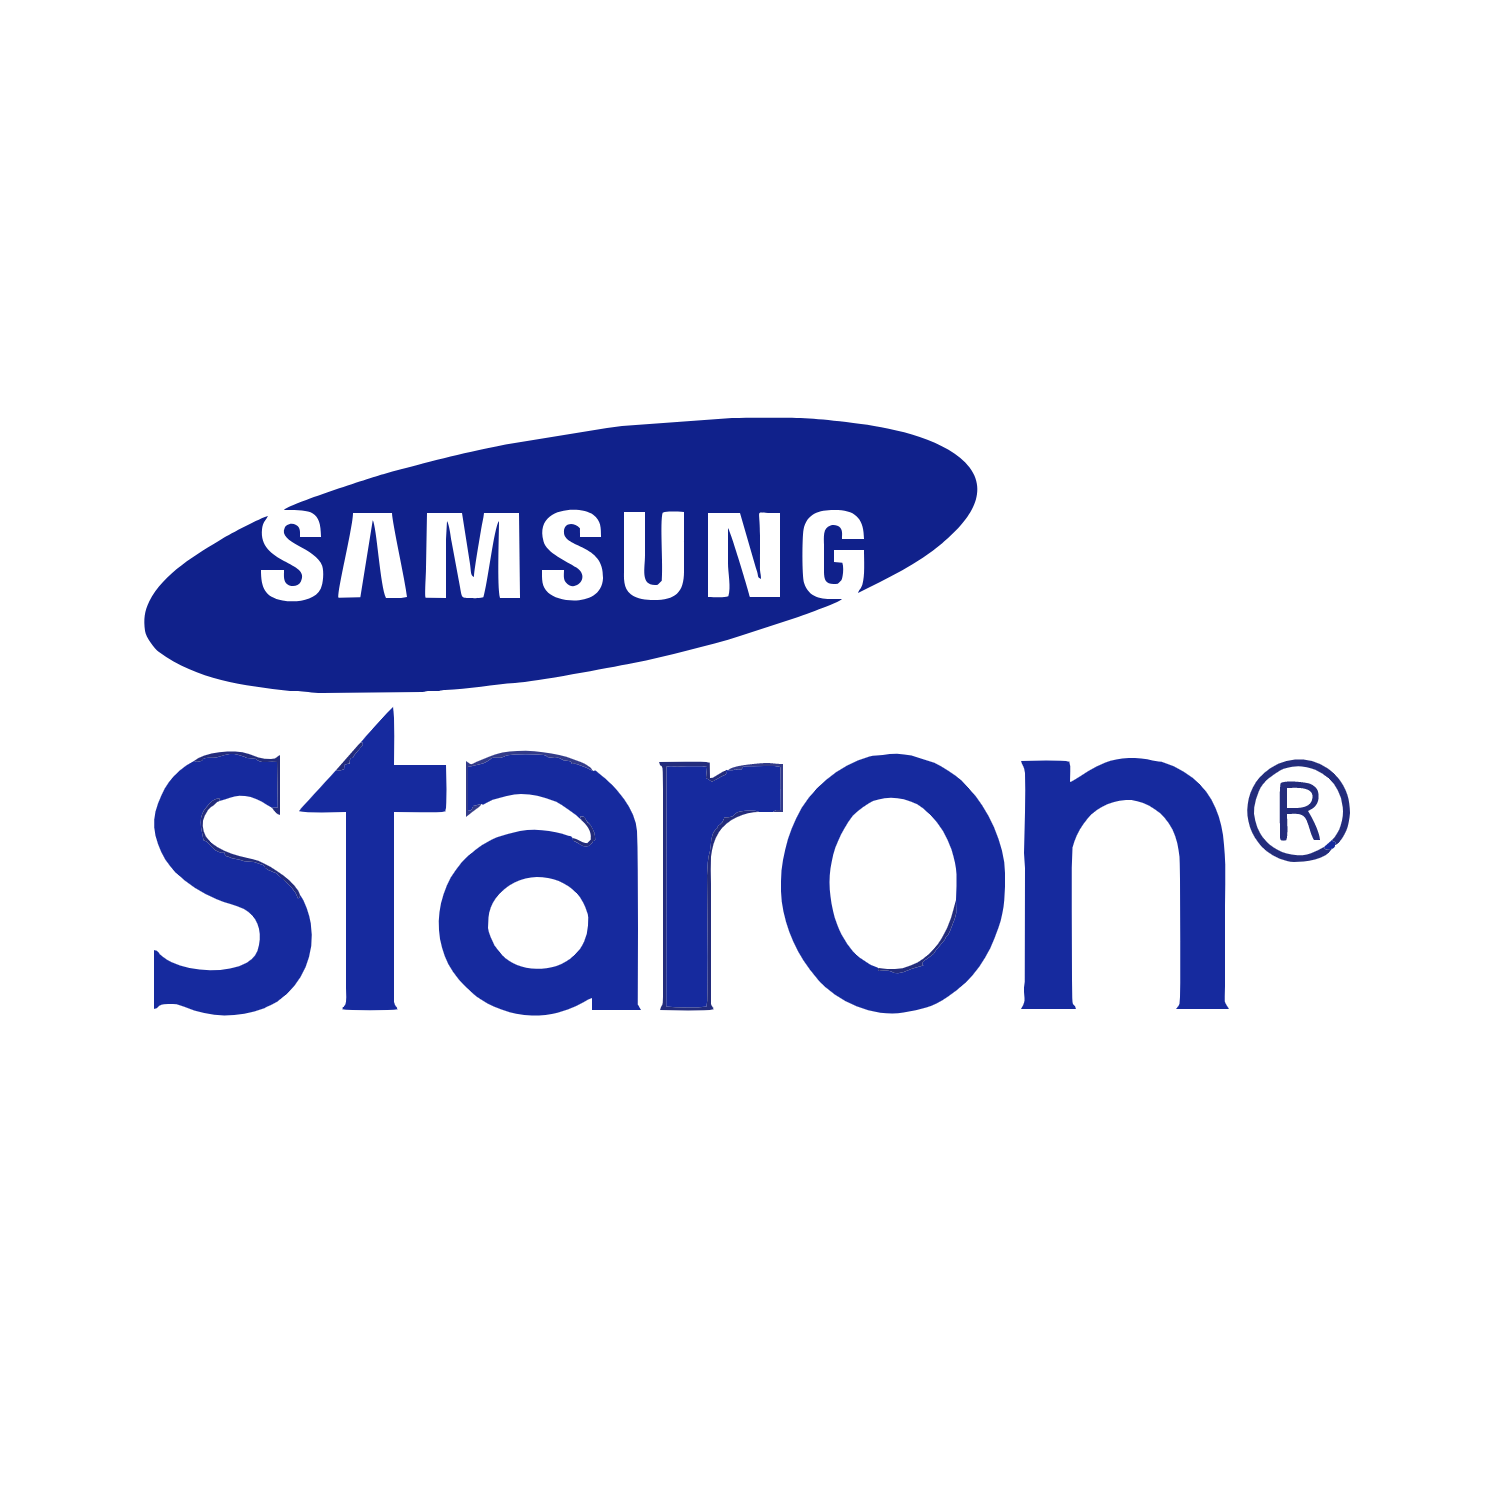 Samsung - Staron (Самсунг - Старон)